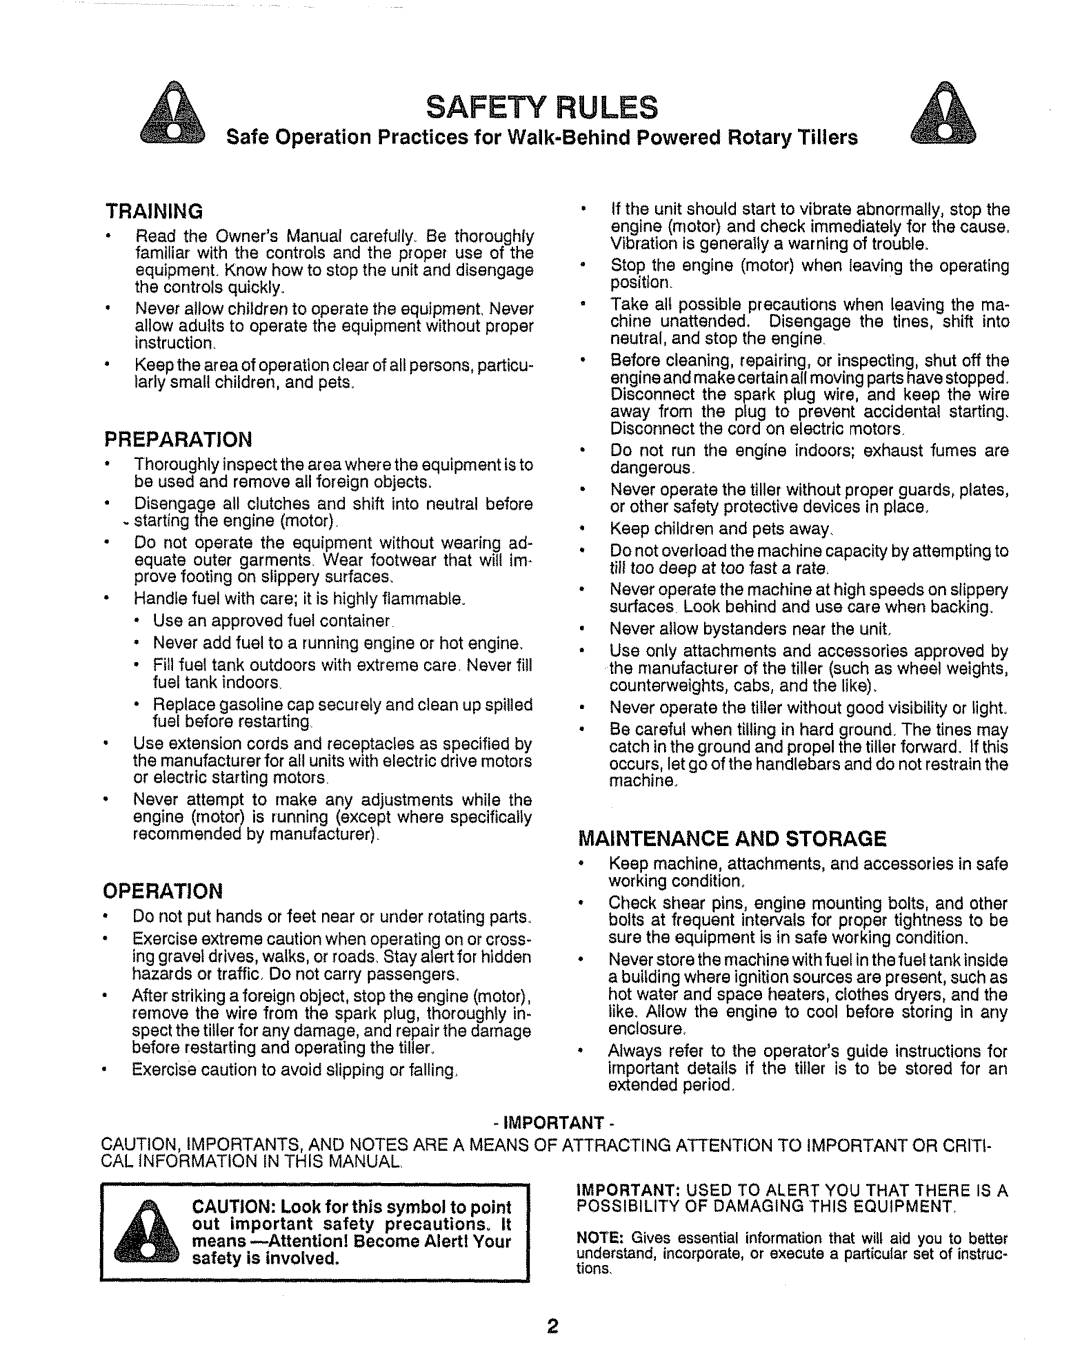 Craftsman 917.29555 manual Safety Rules, Operation, Maintenance And Storage, Training, Preparation 